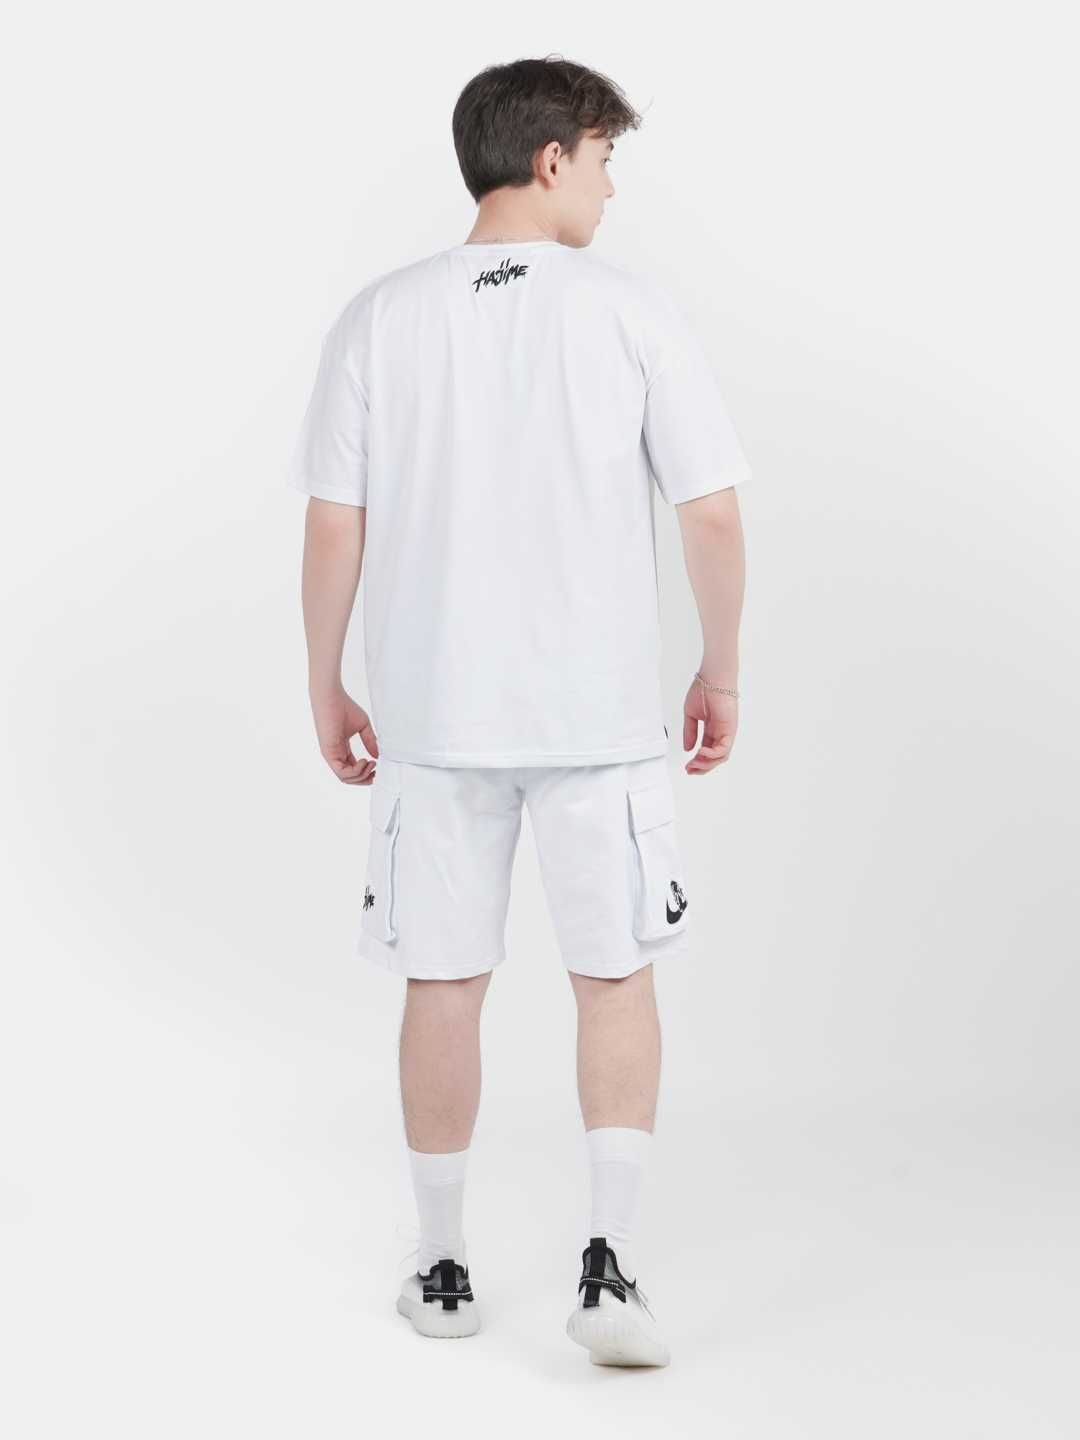 Мужской комплект MiyaGi Hajime Nike: футболка и шорты комплект летний